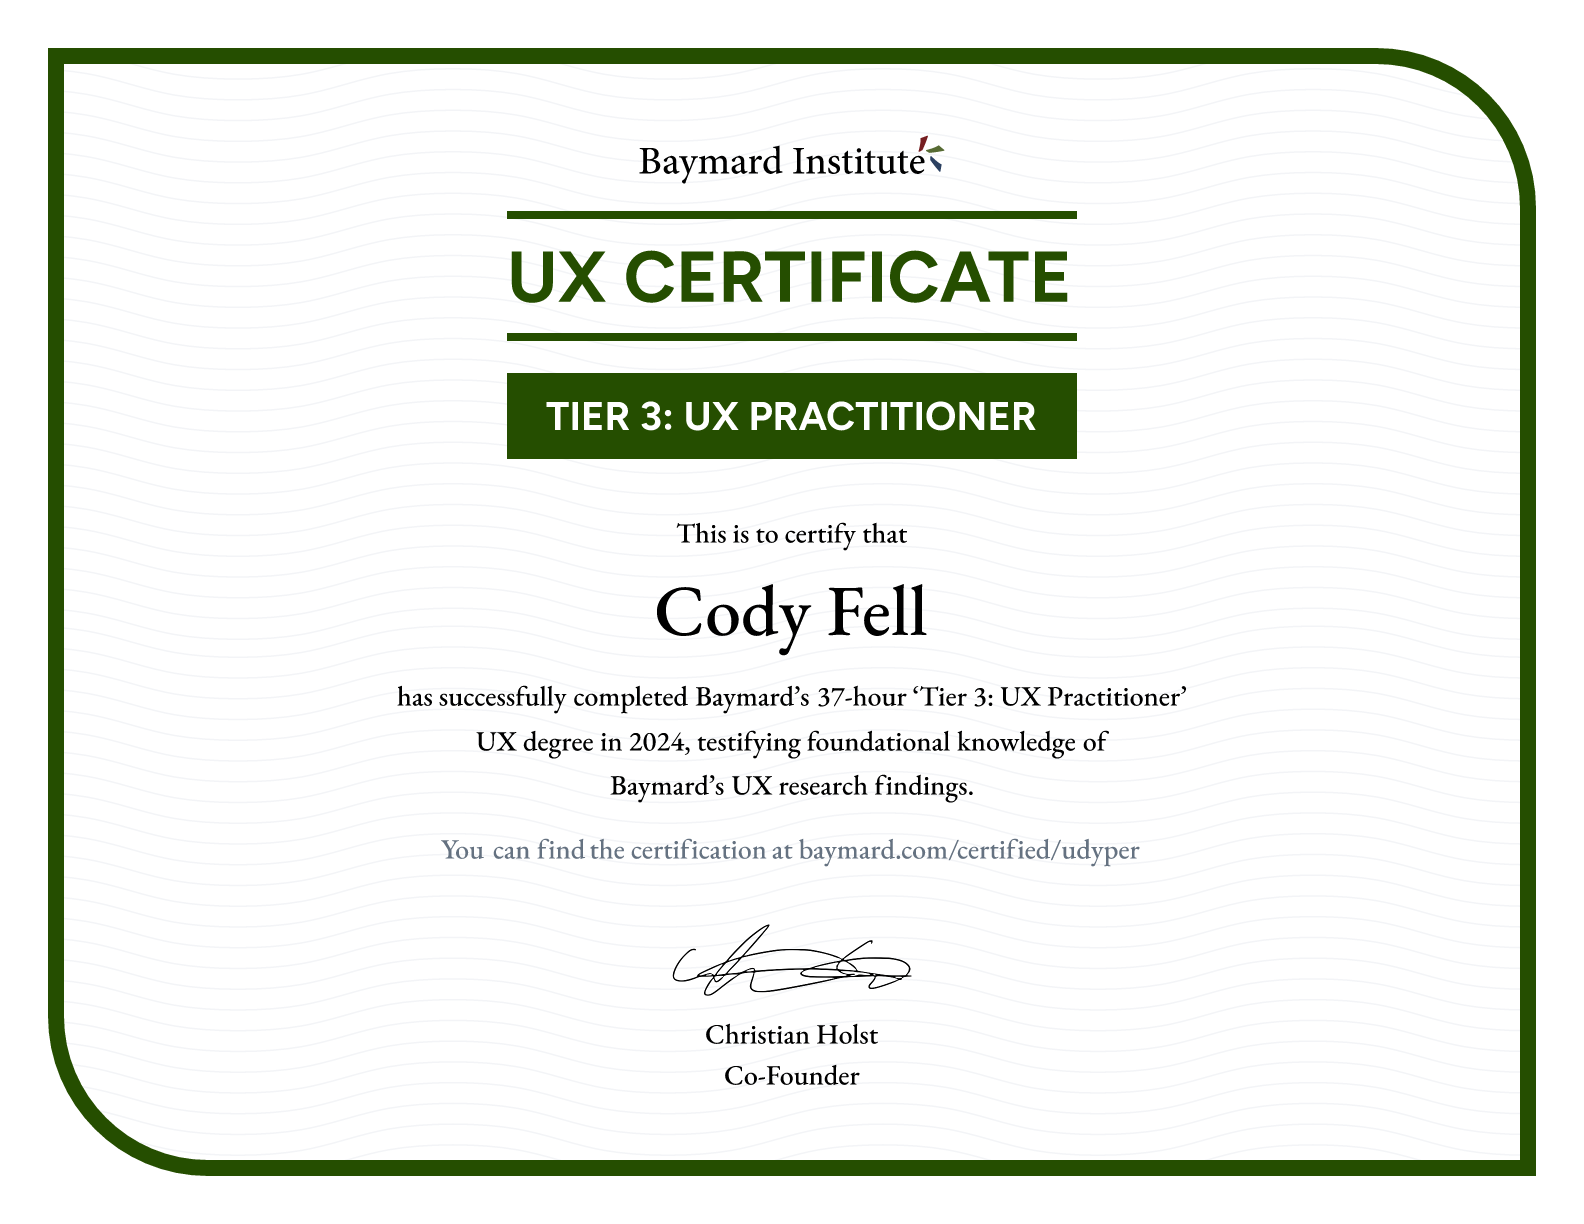 Cody Fell’s certificate